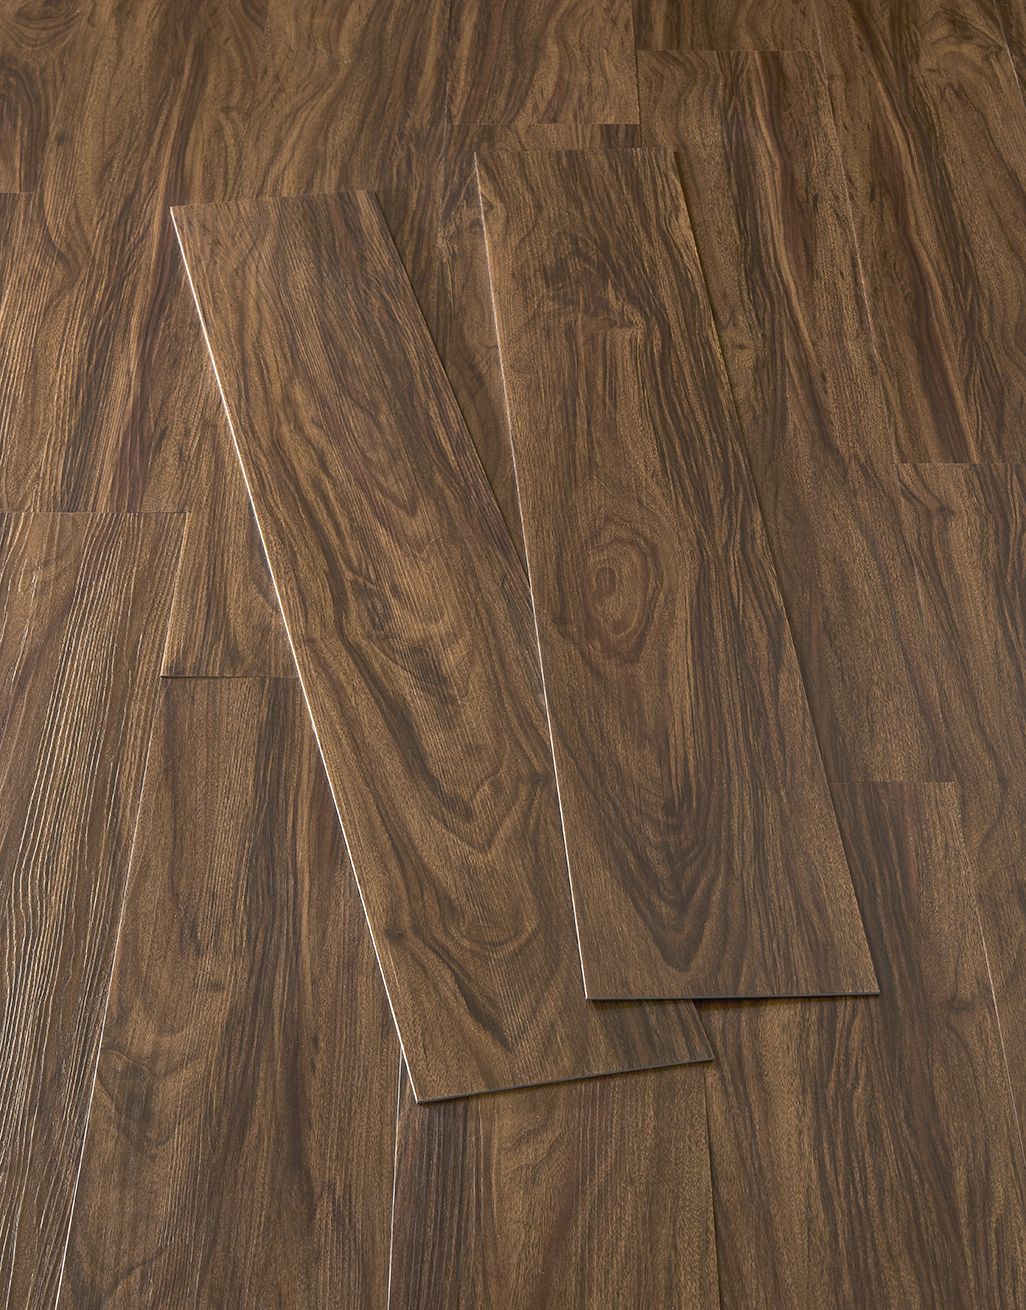 Evocore Design Floor Enhance Black, Sierra Luxury Vinyl Flooring Reviews Uk